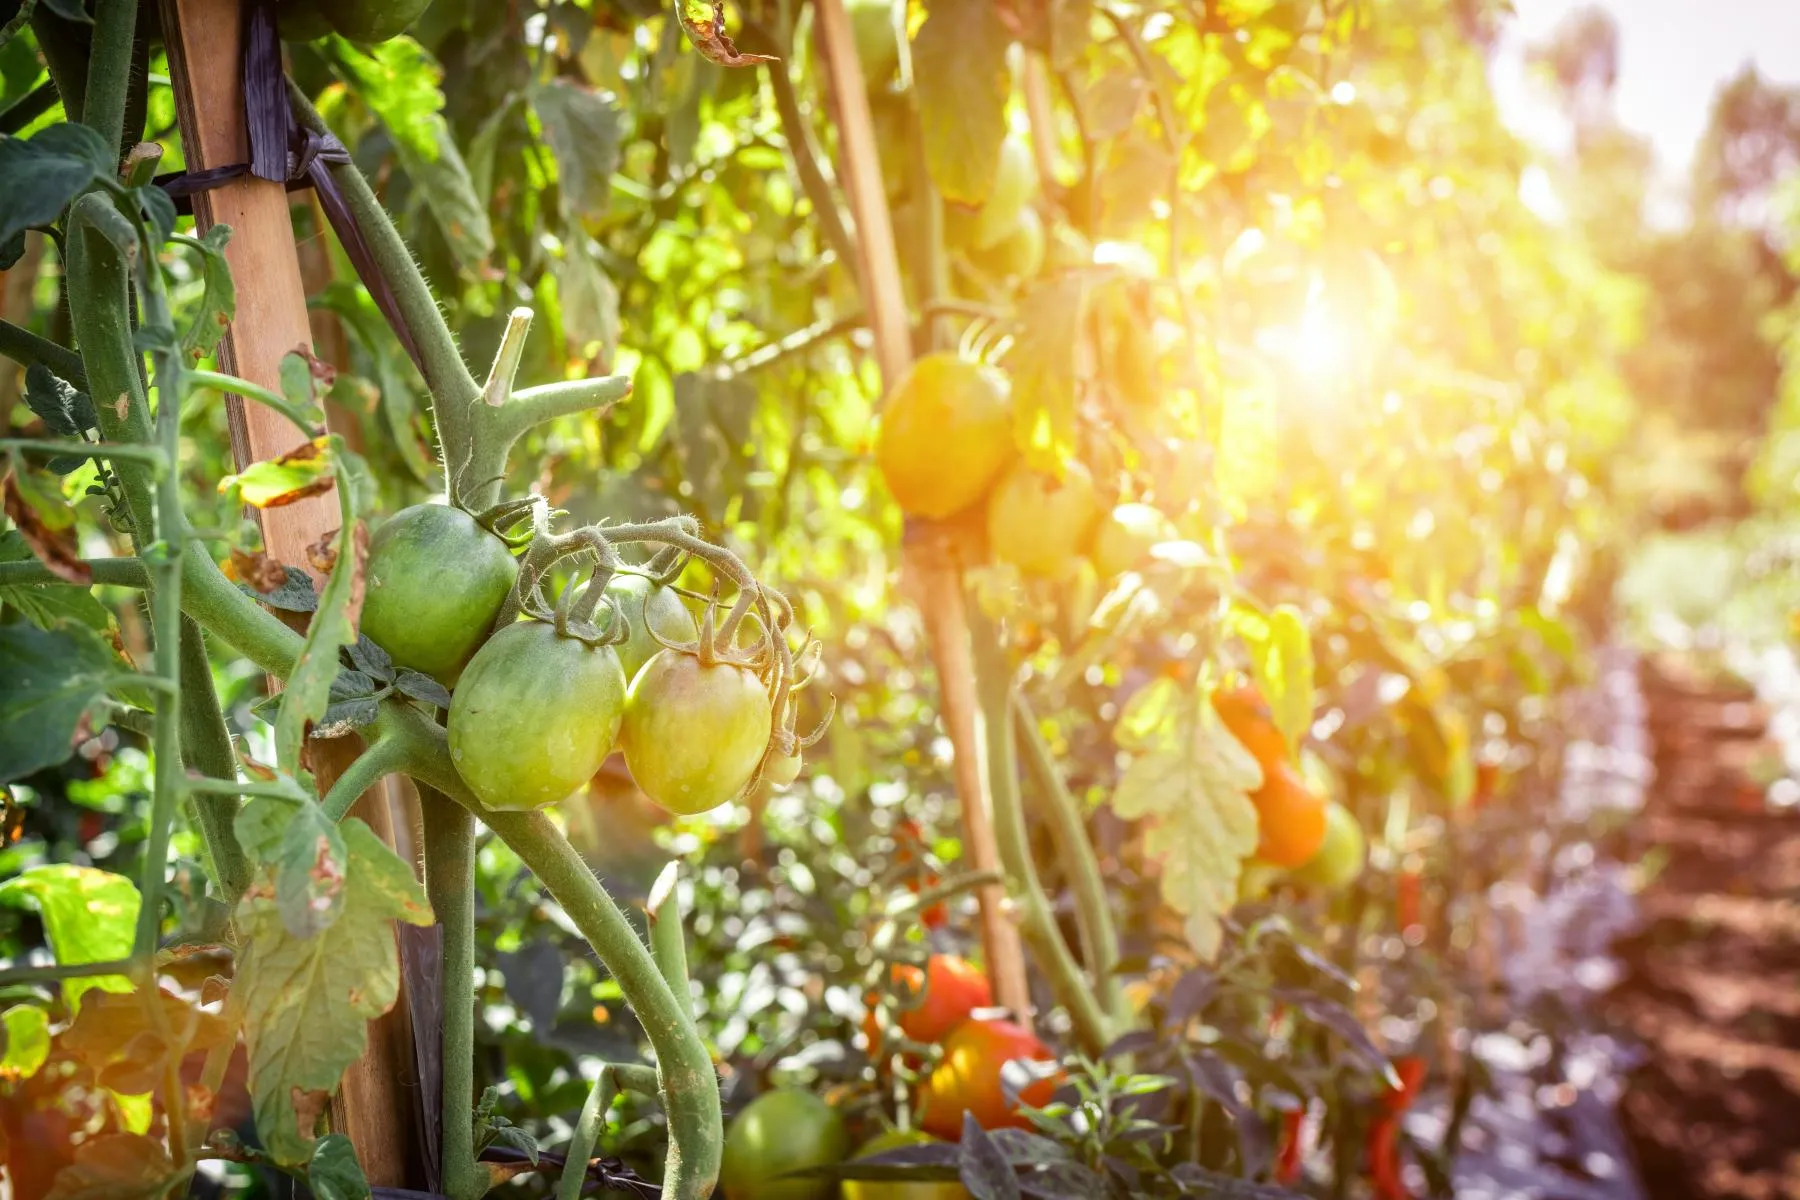 Плантация томатов. Помидорные плантации. Теплица с помидорами. Поле томатов. Урожайность томата семеновна